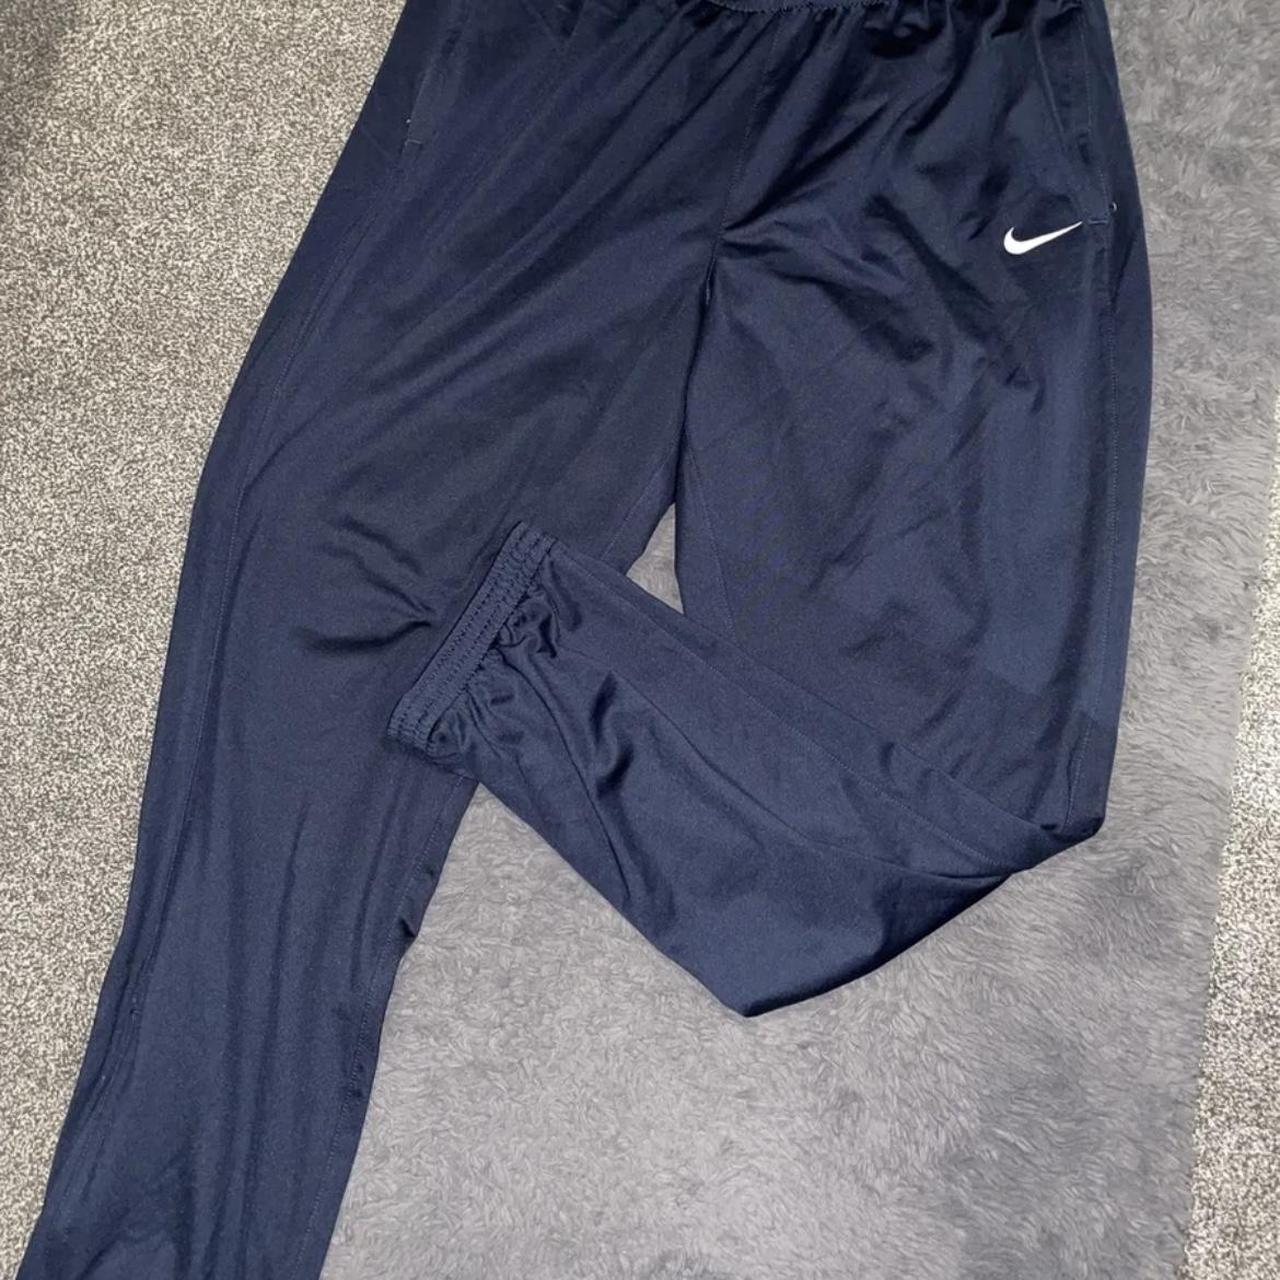 Women's Nike tracksuit bottoms / joggers Navy blue - Depop